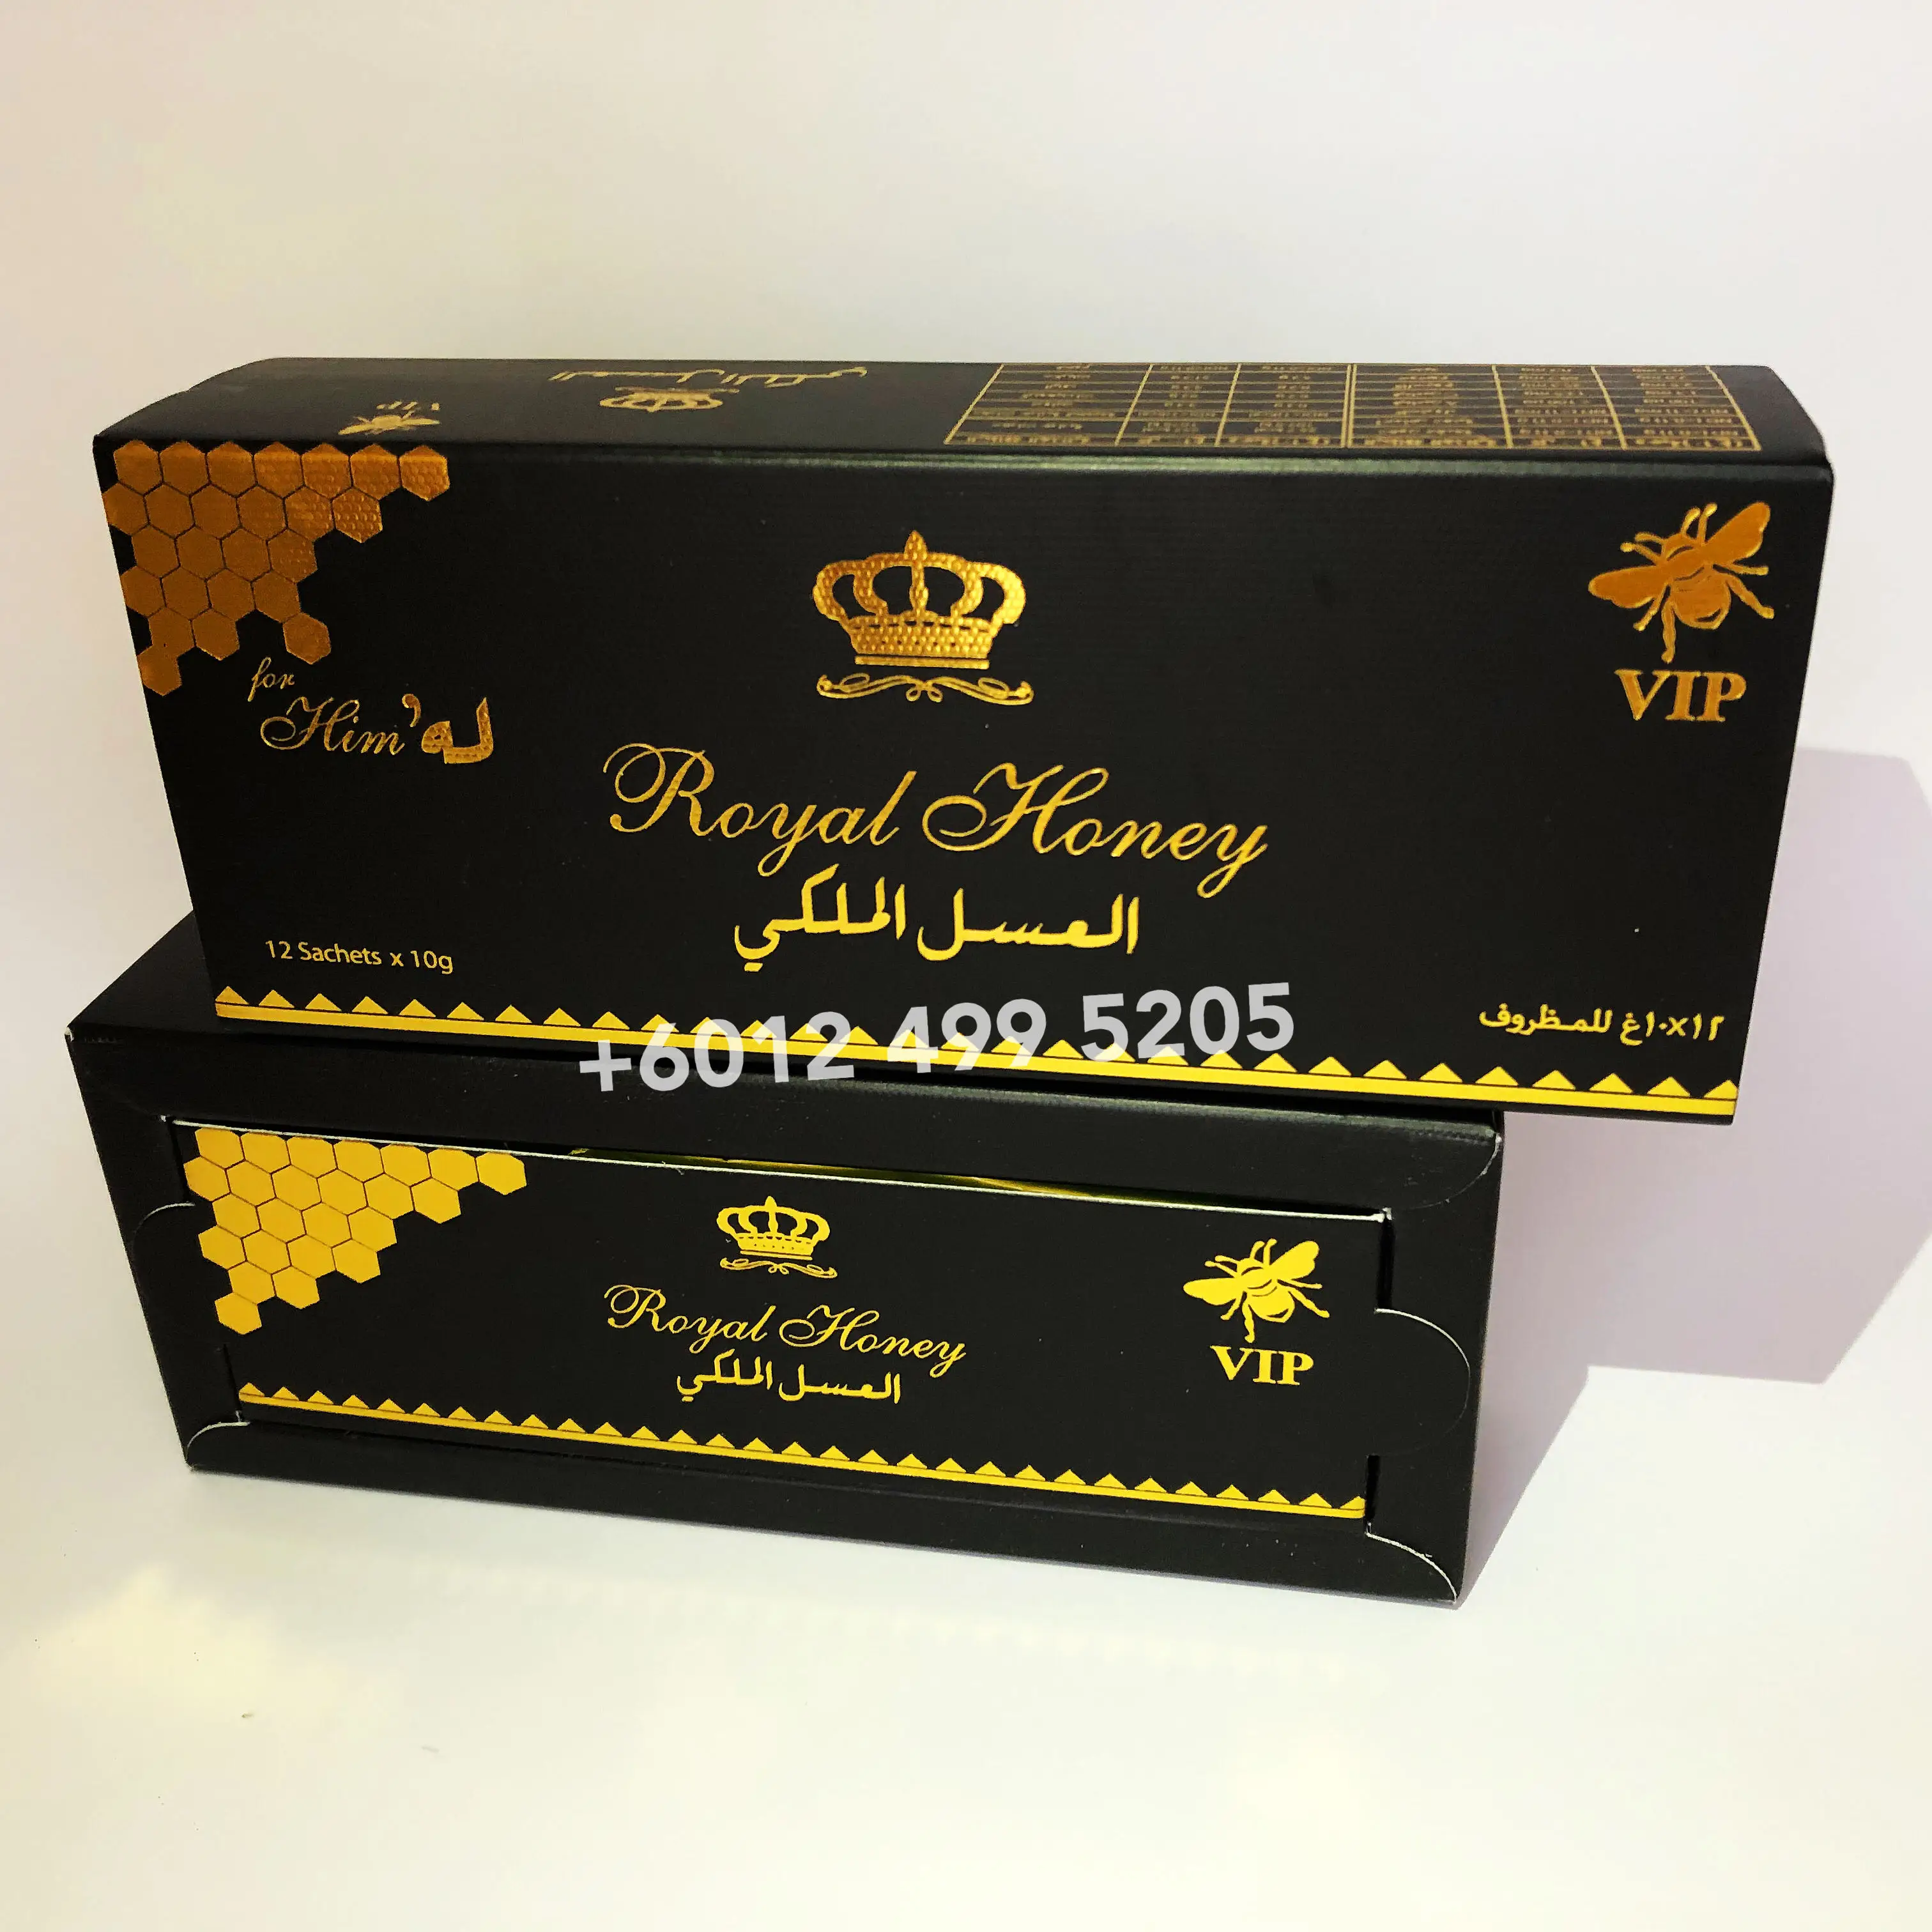 Royal honey. Королевский мёд Royal Honey. Bio Herbs Royal King Honey. Малазийский мед для мужчин. Королевский медь Royal Honey.